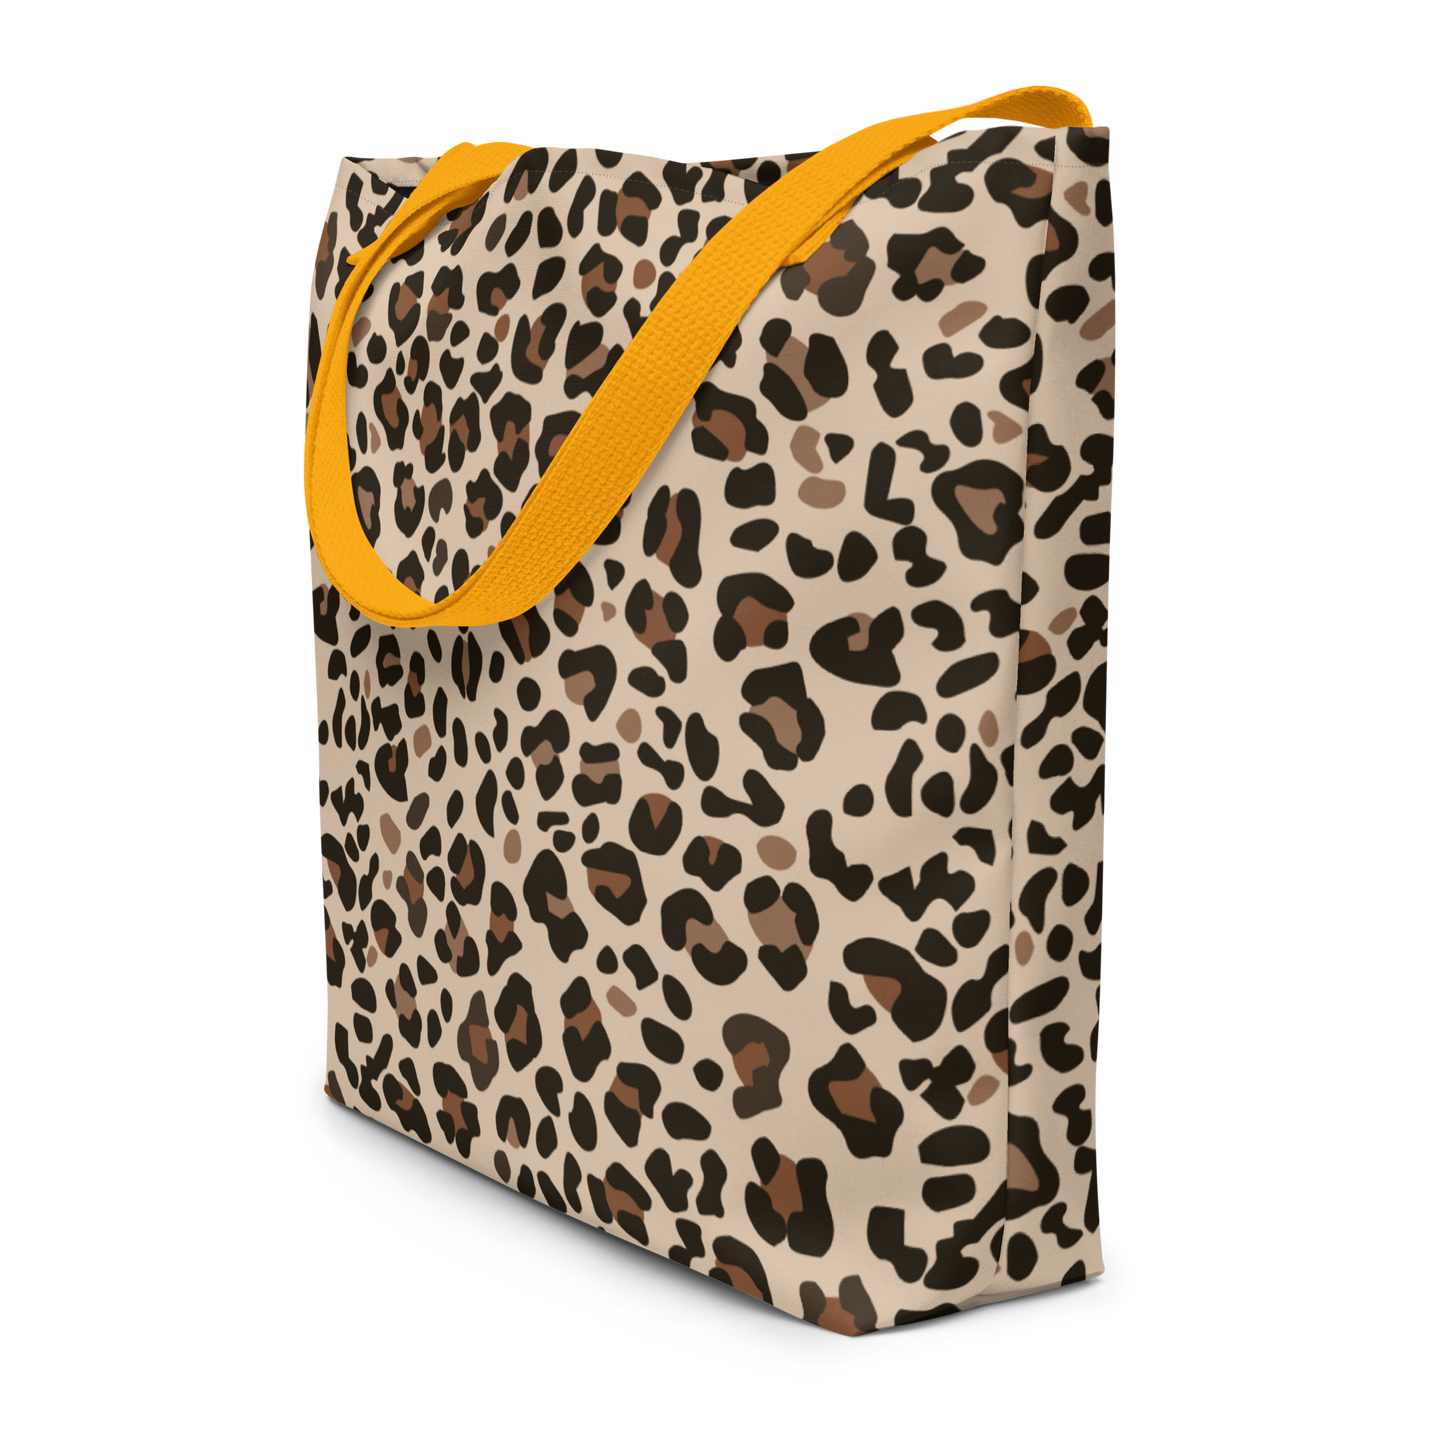 Large Tote Bag 16" x 20" | Leopard Animal Print